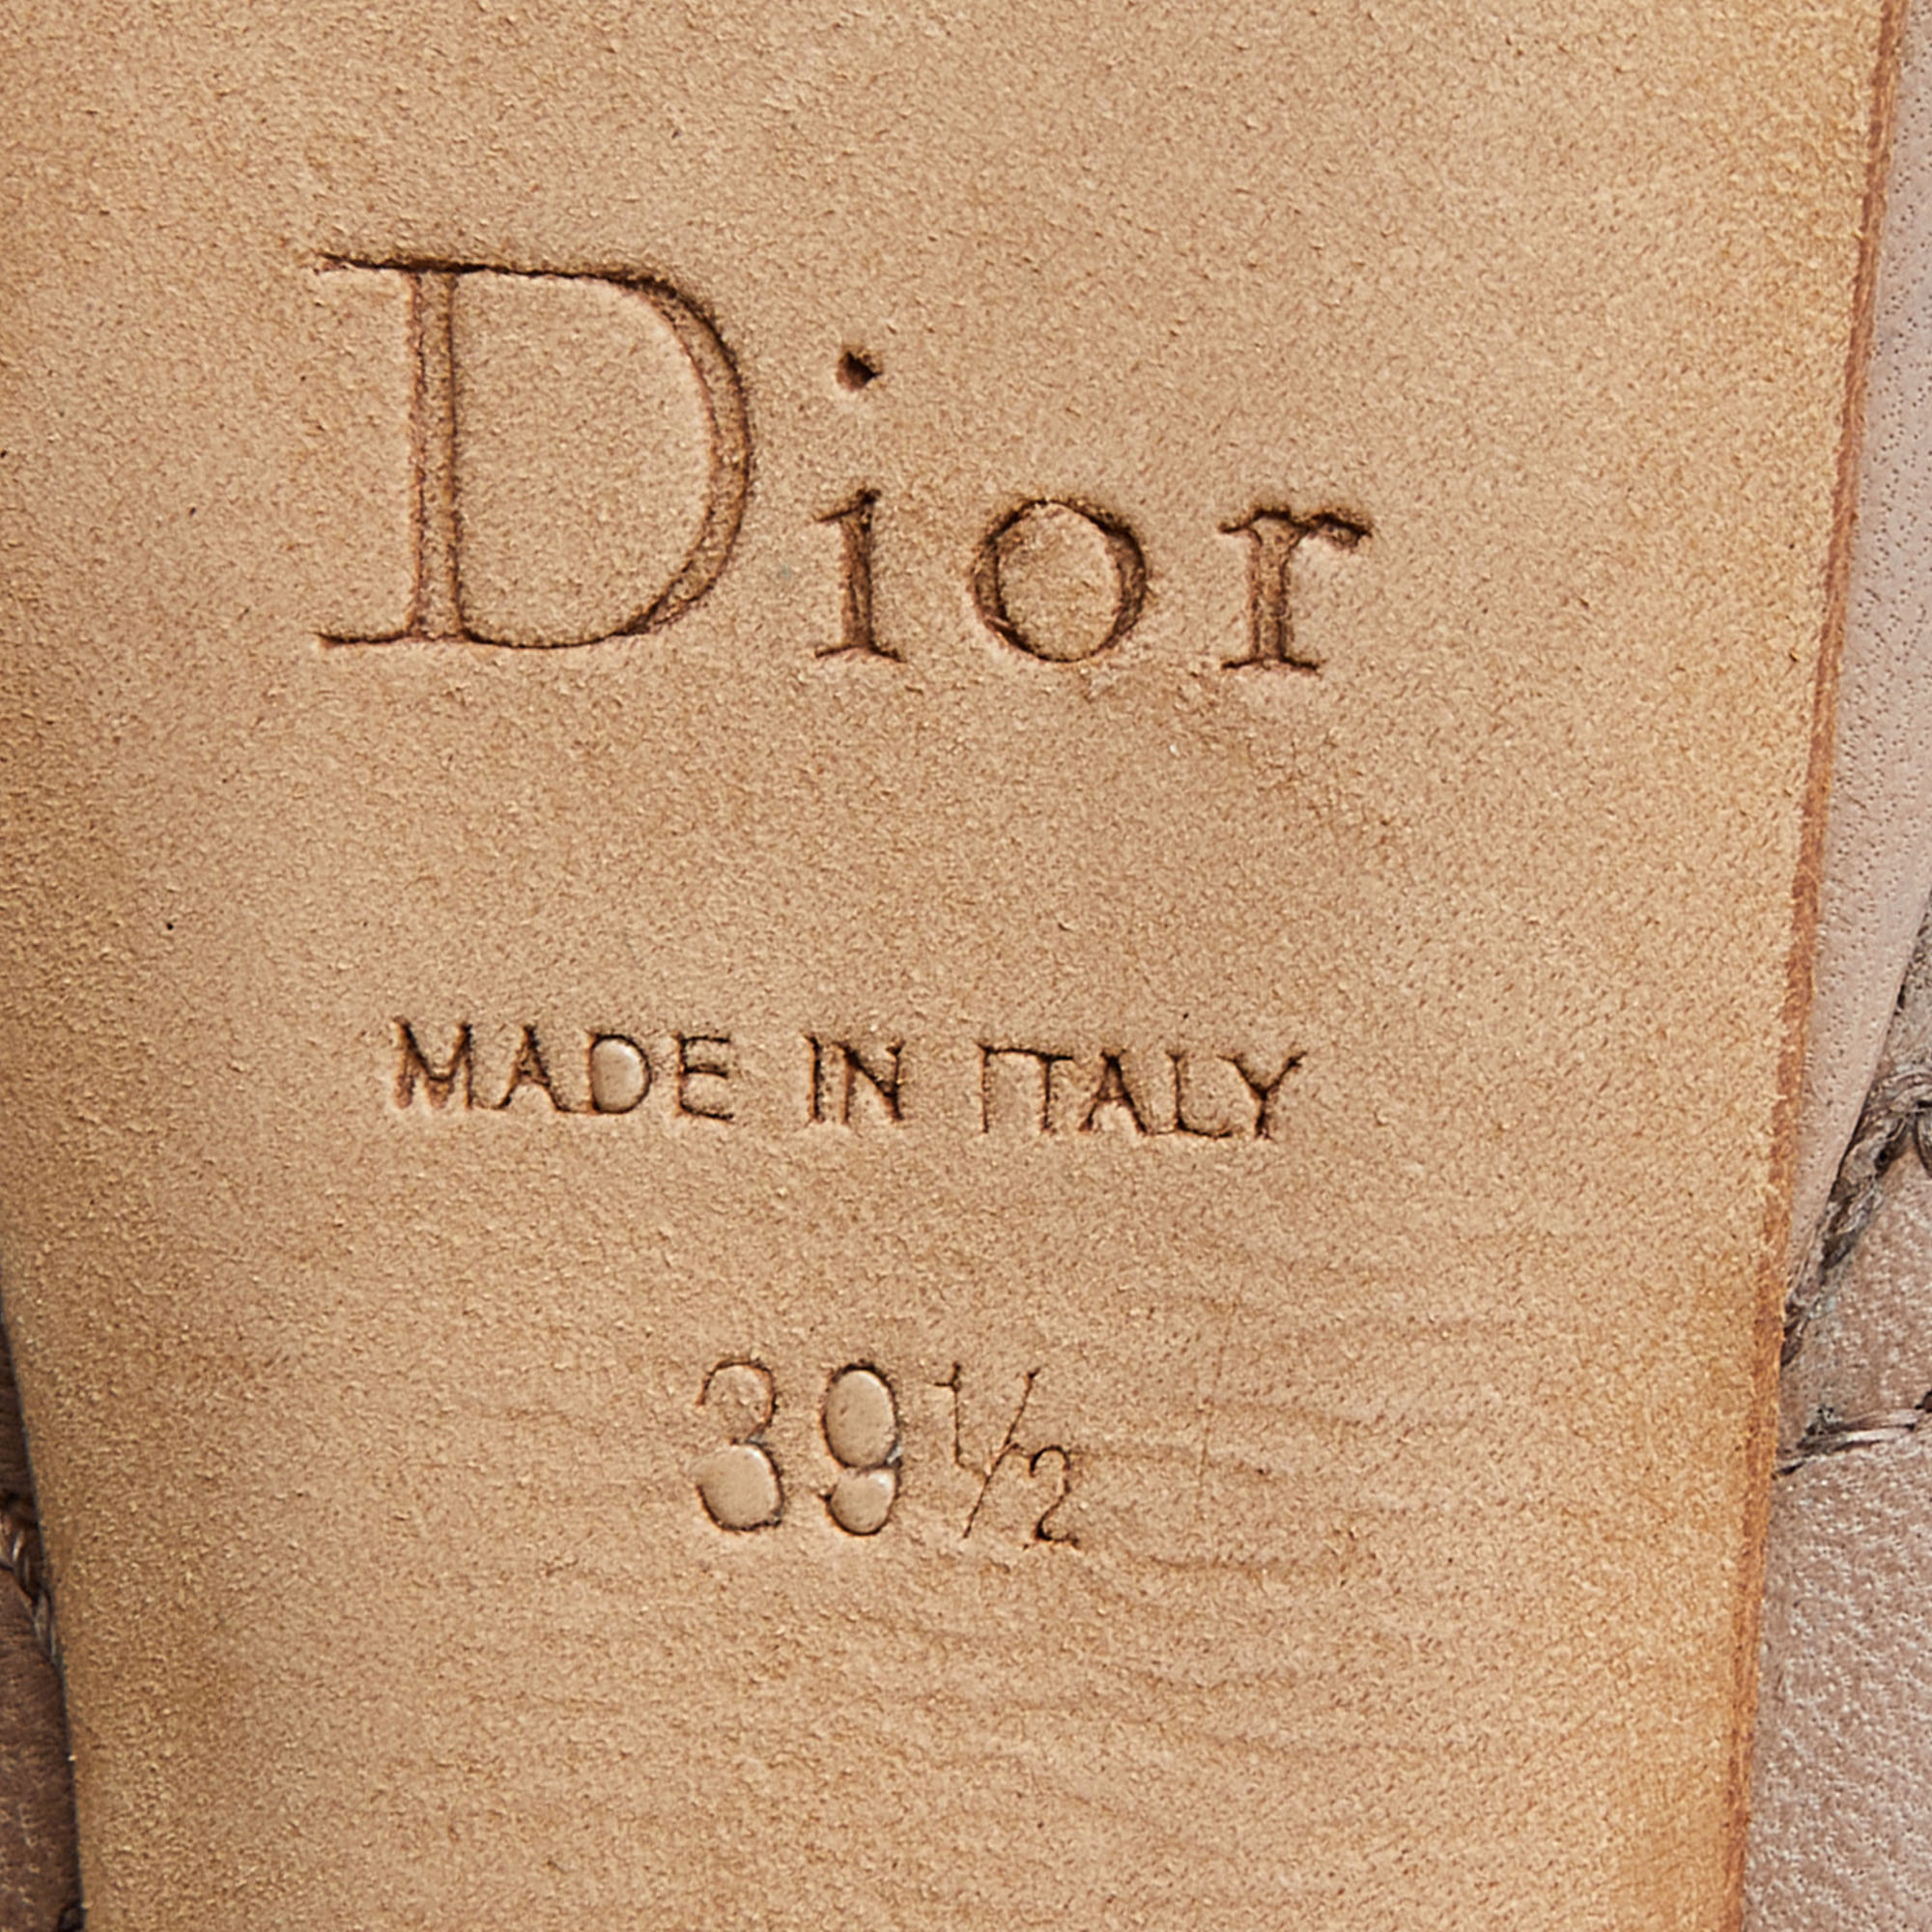 Dior Beige Cannage Leather Peep Toe Pumps Size 39.5